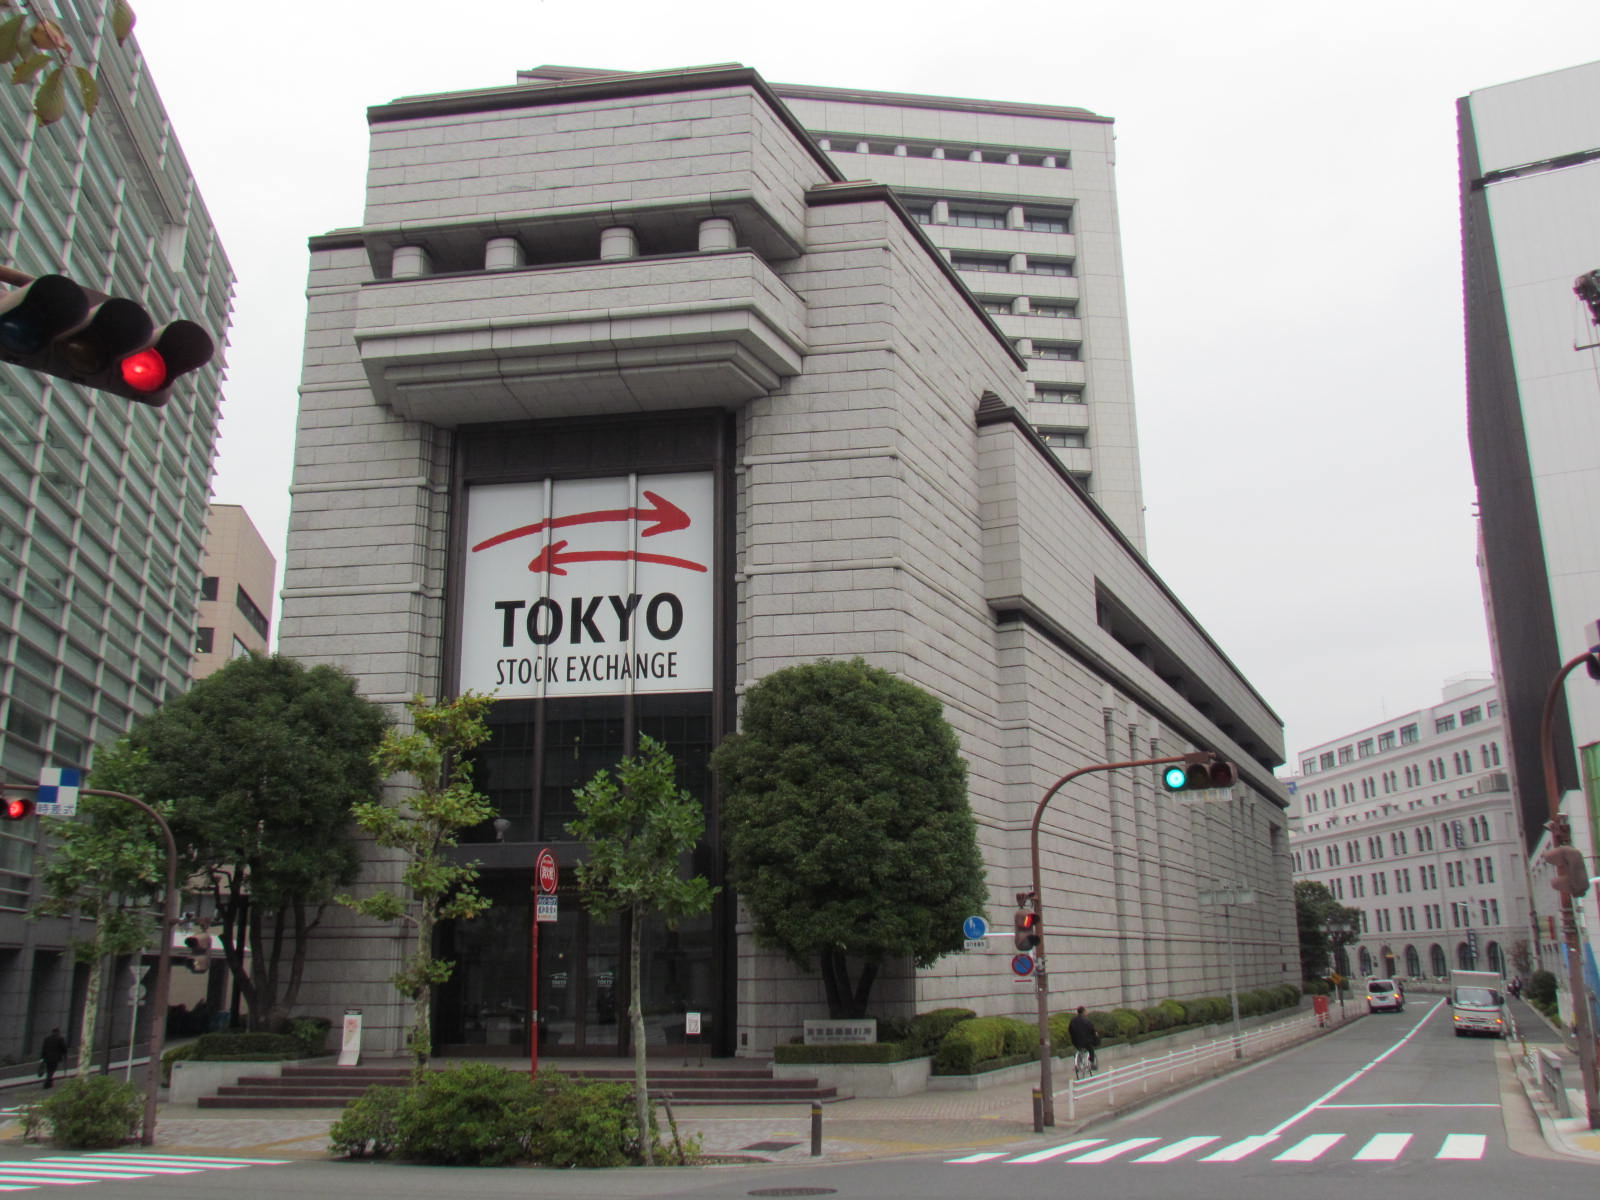 Tokyo Stock Exchange Attractions in Kayabacho, Tokyo